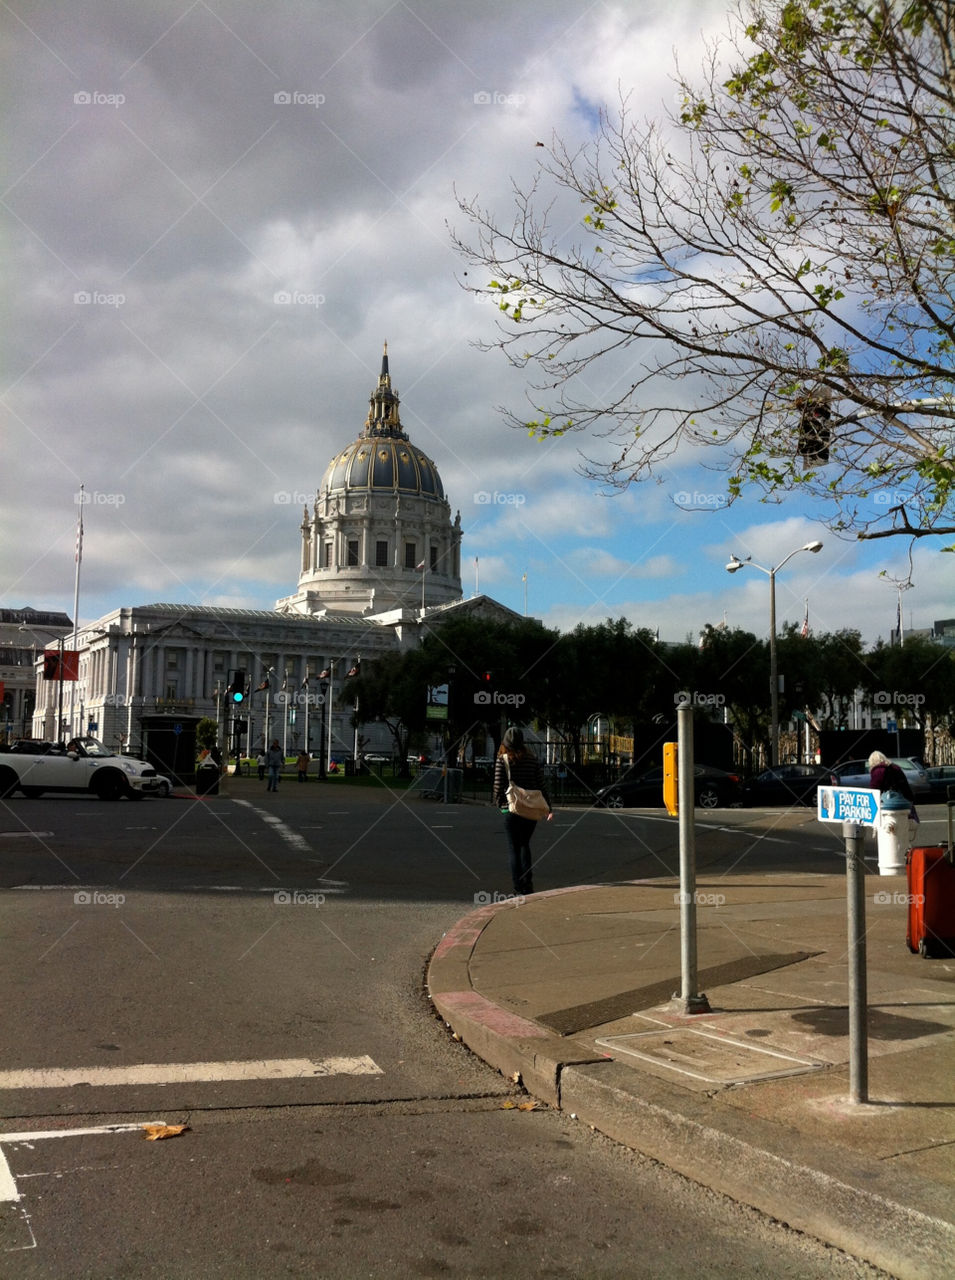 San Francisco City Hall with overcast.